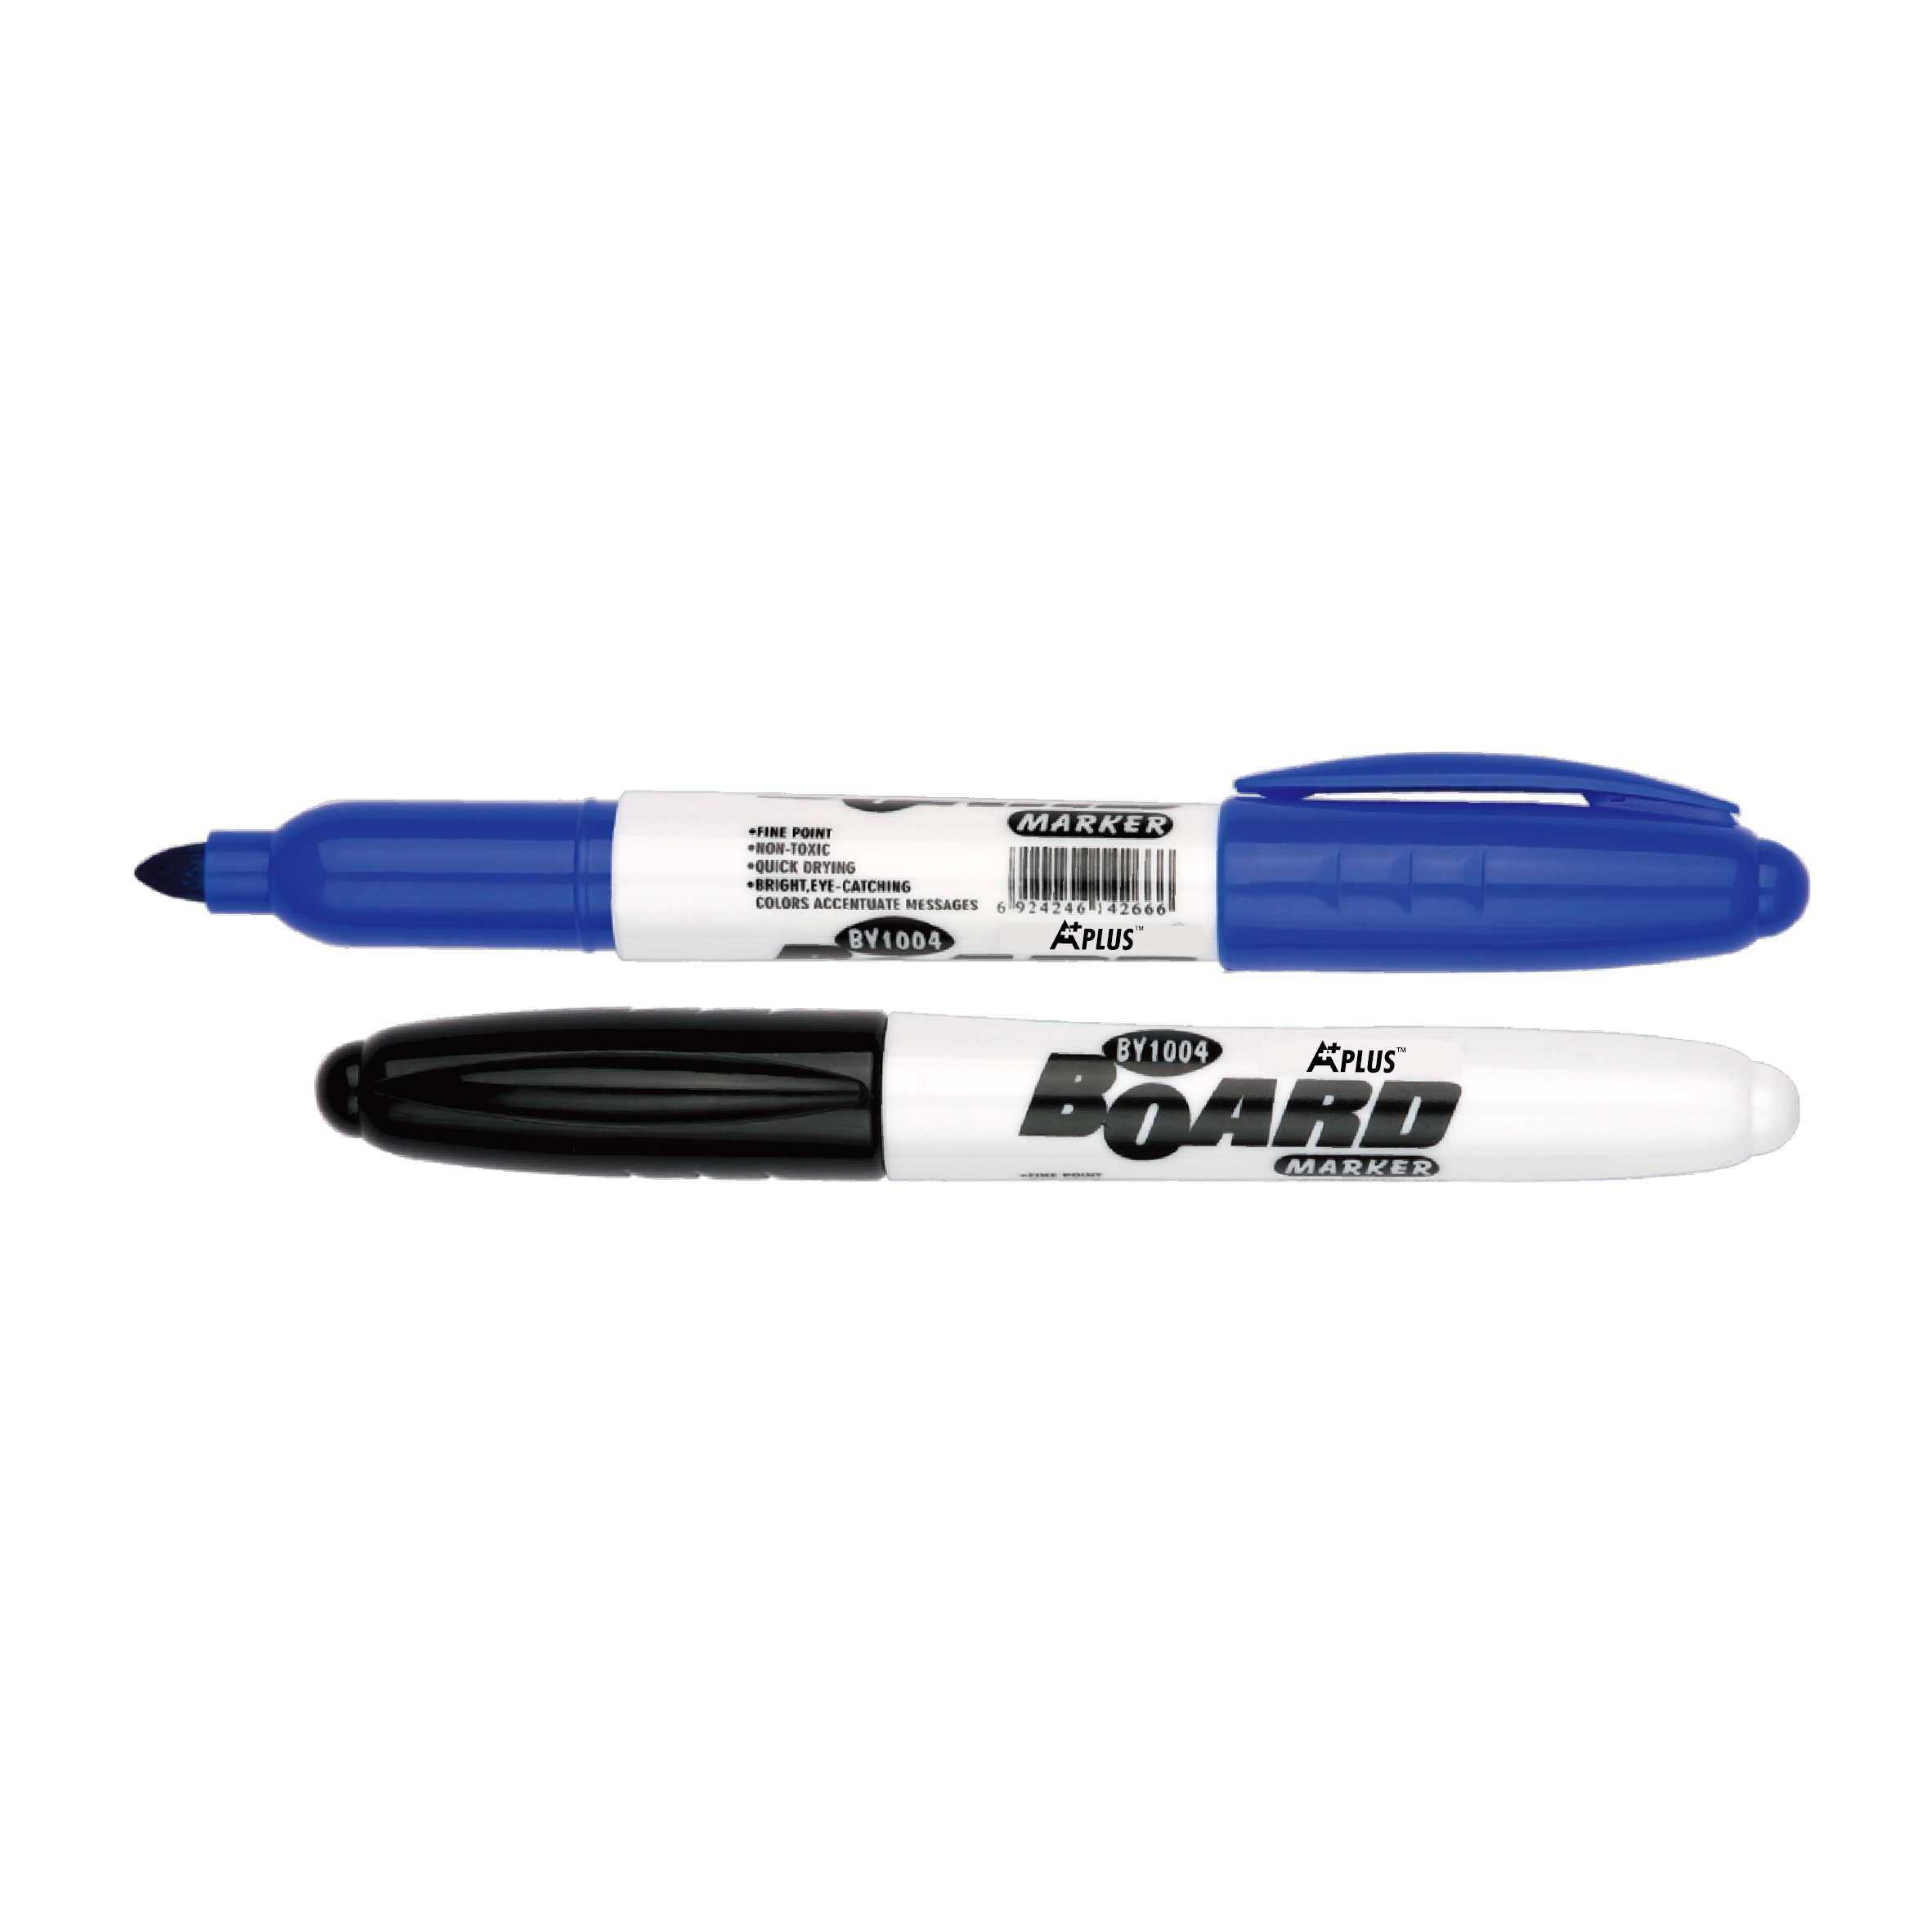 Nice Quality 12 Colors Marker Pen Set Wholesale Whiteboard Marker